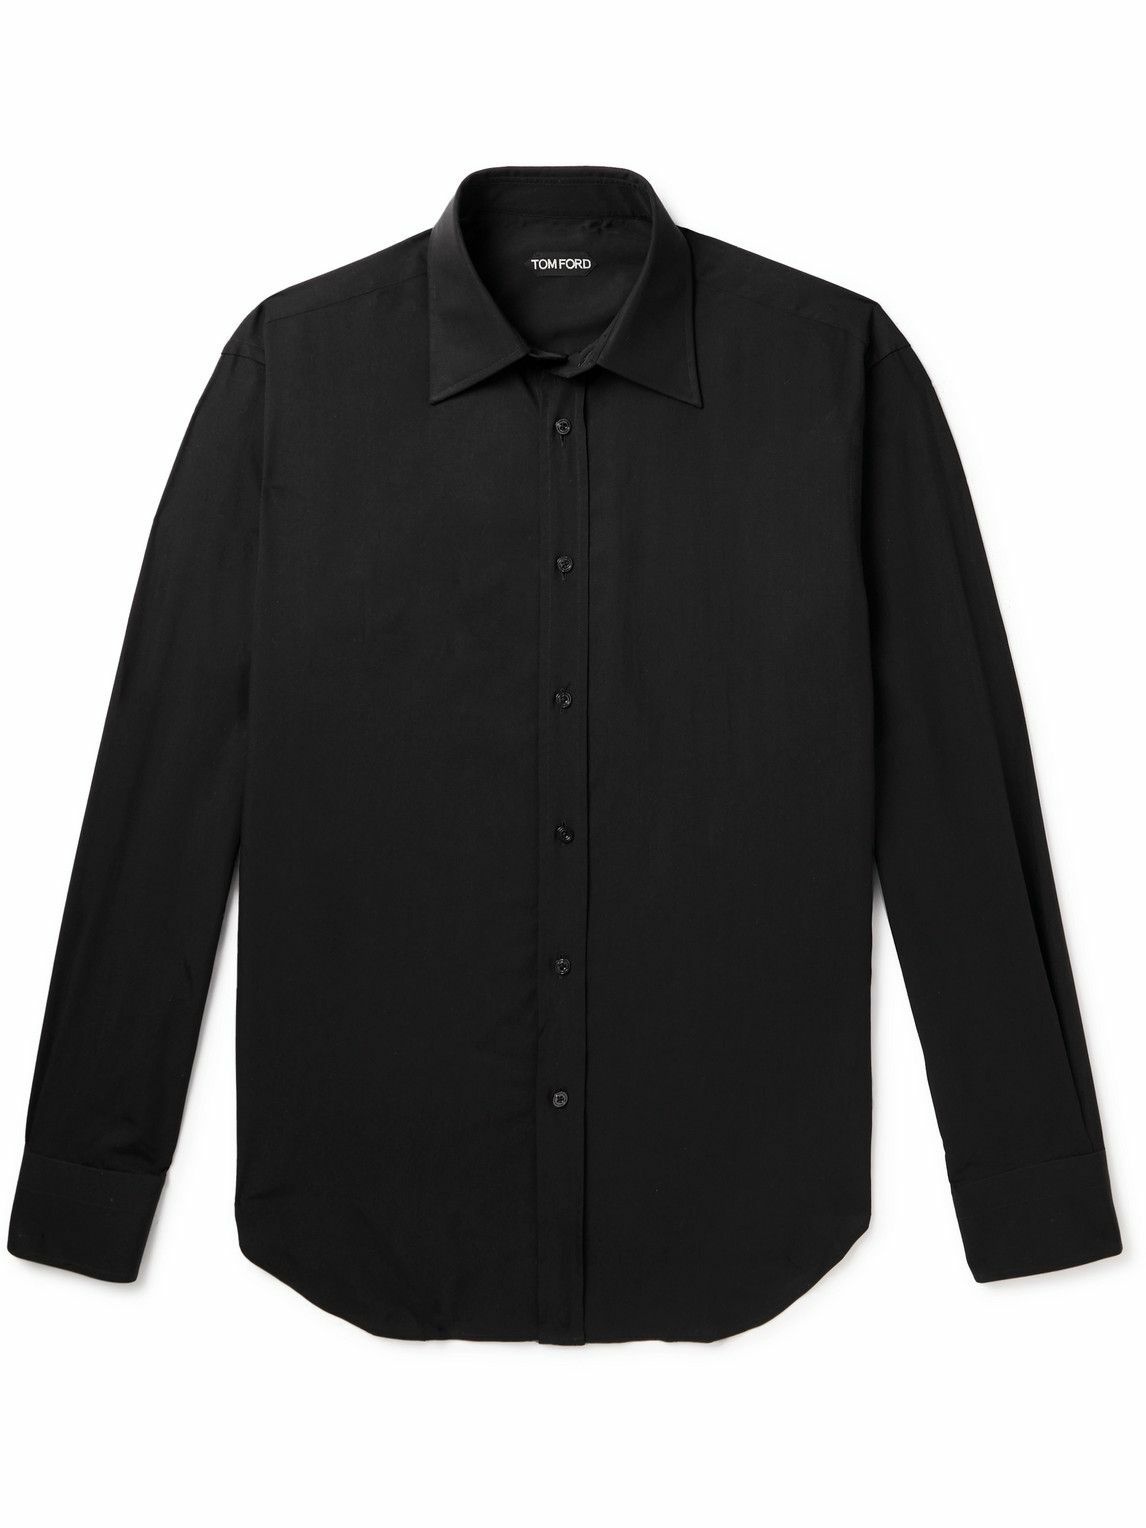 TOM FORD - Lyocell and Silk-Blend Shirt - Black TOM FORD